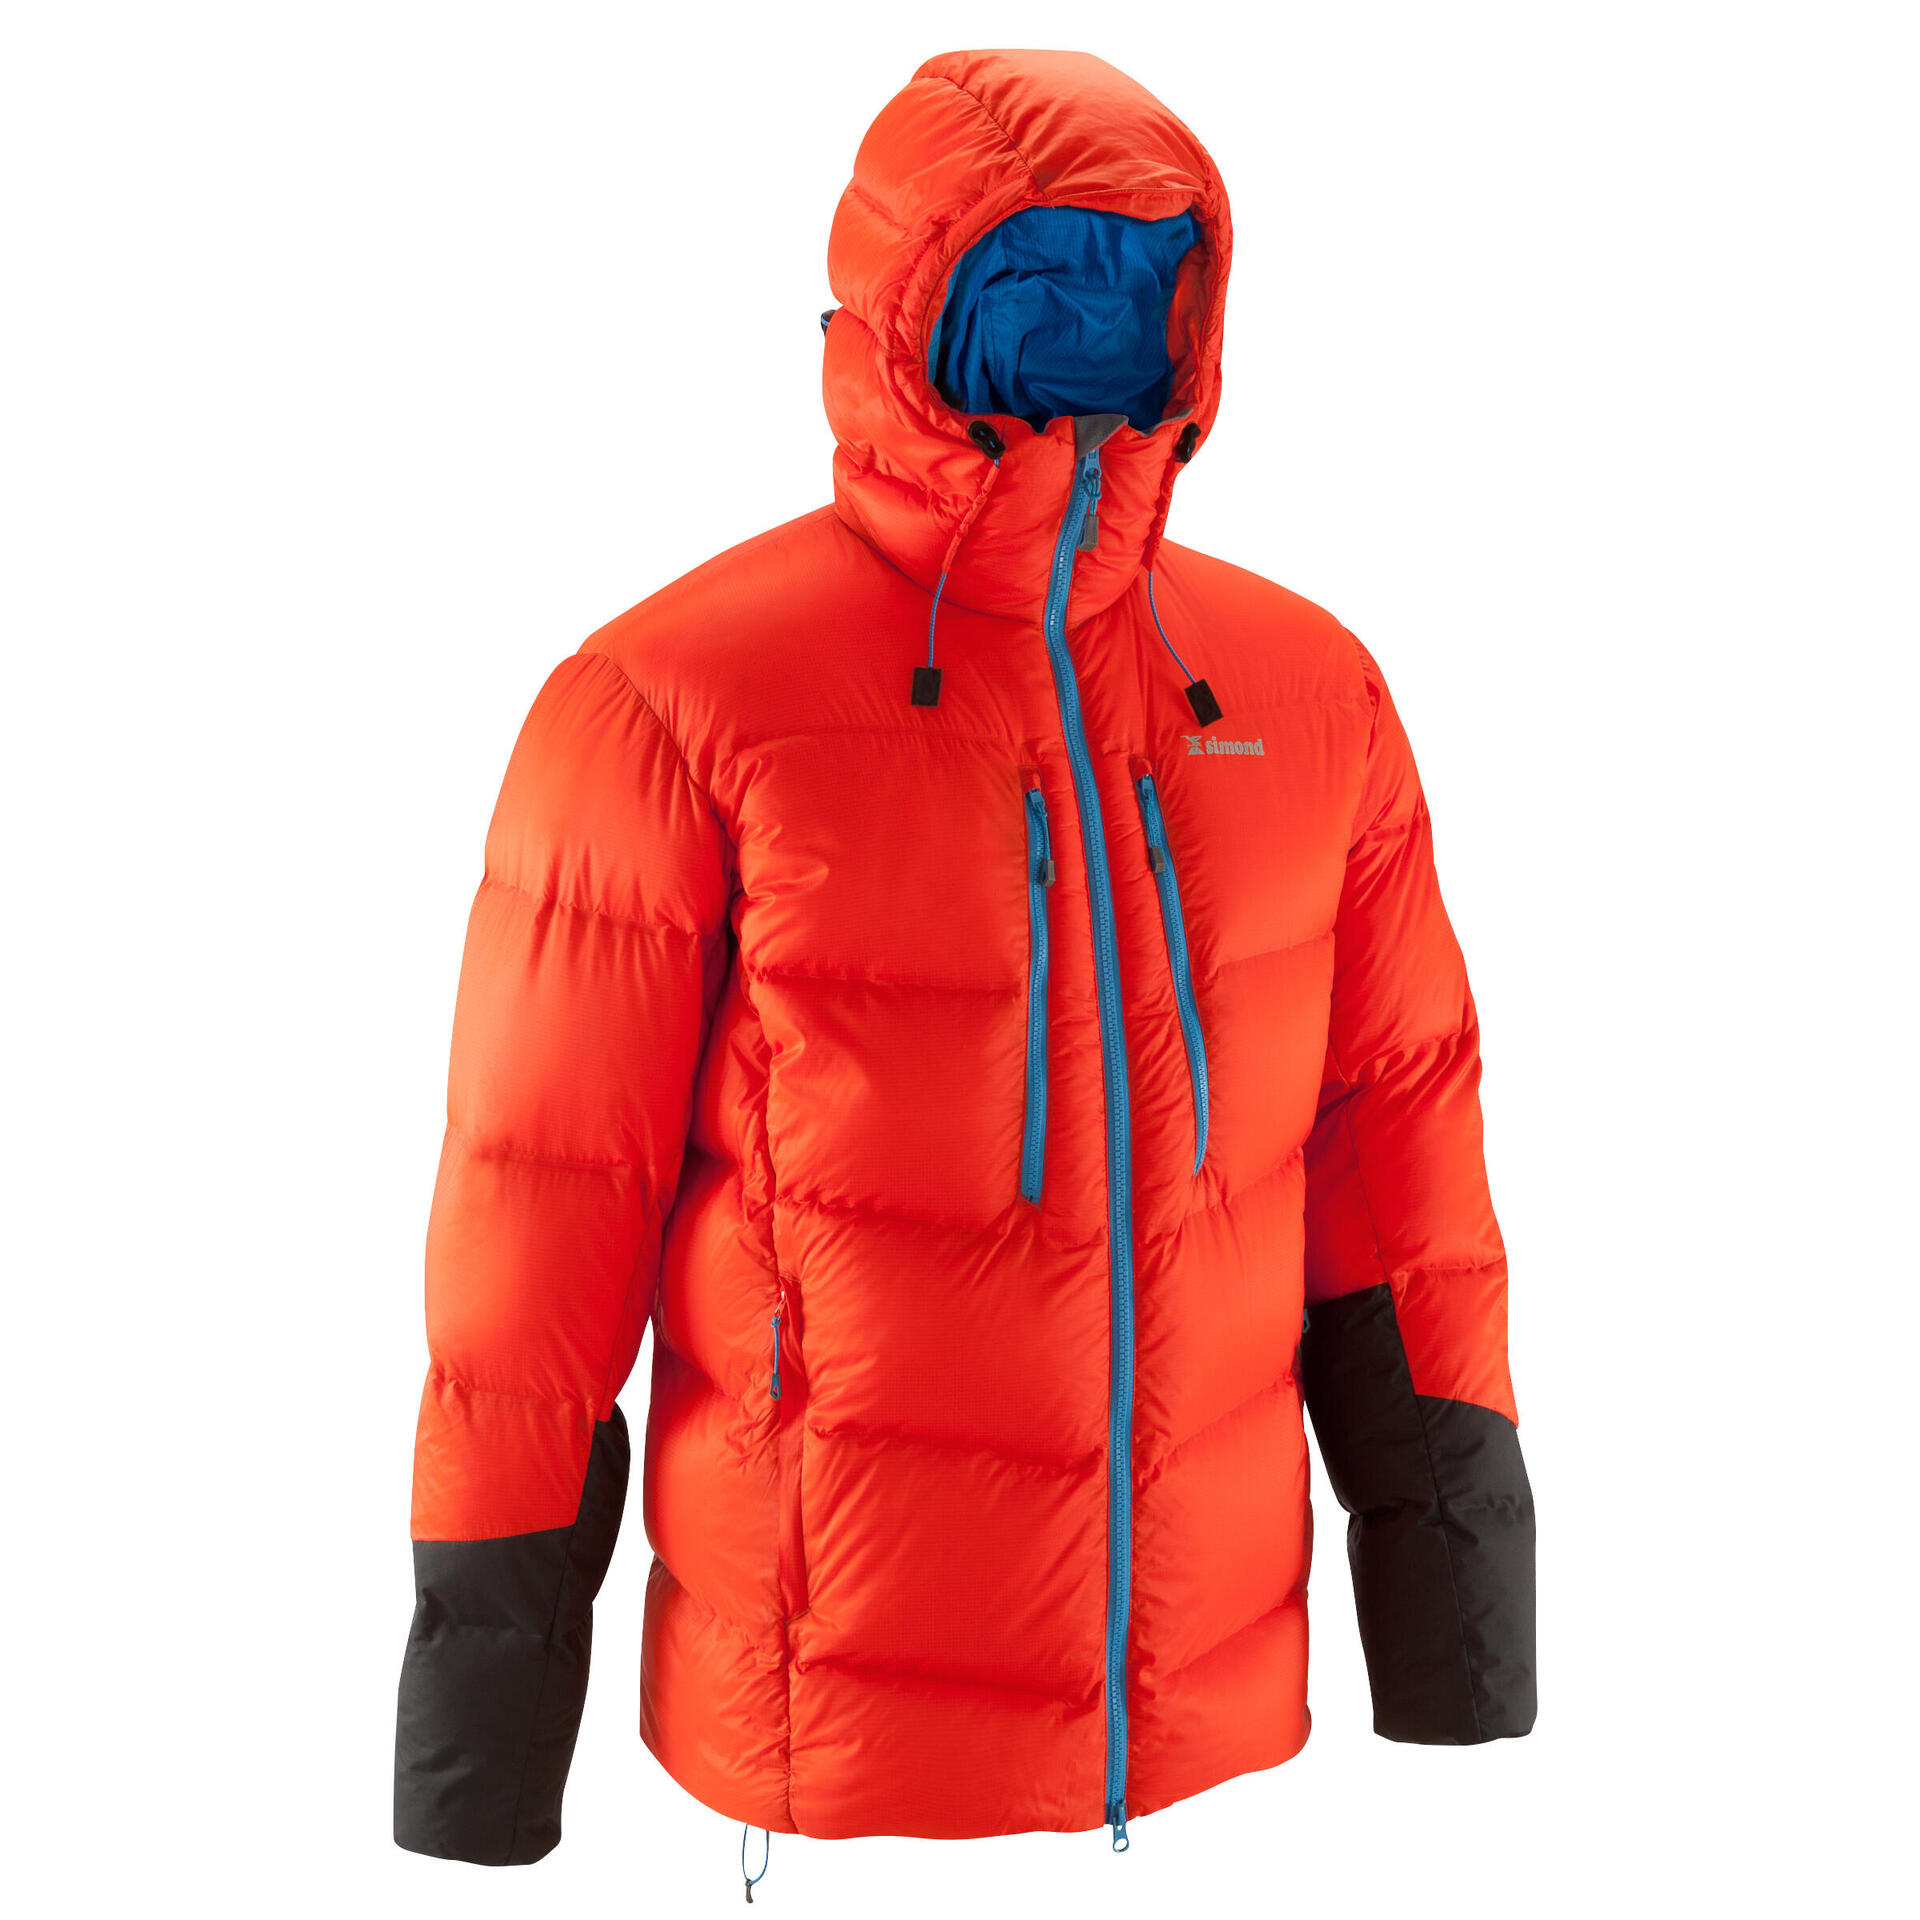 Padded mountaineering jacket